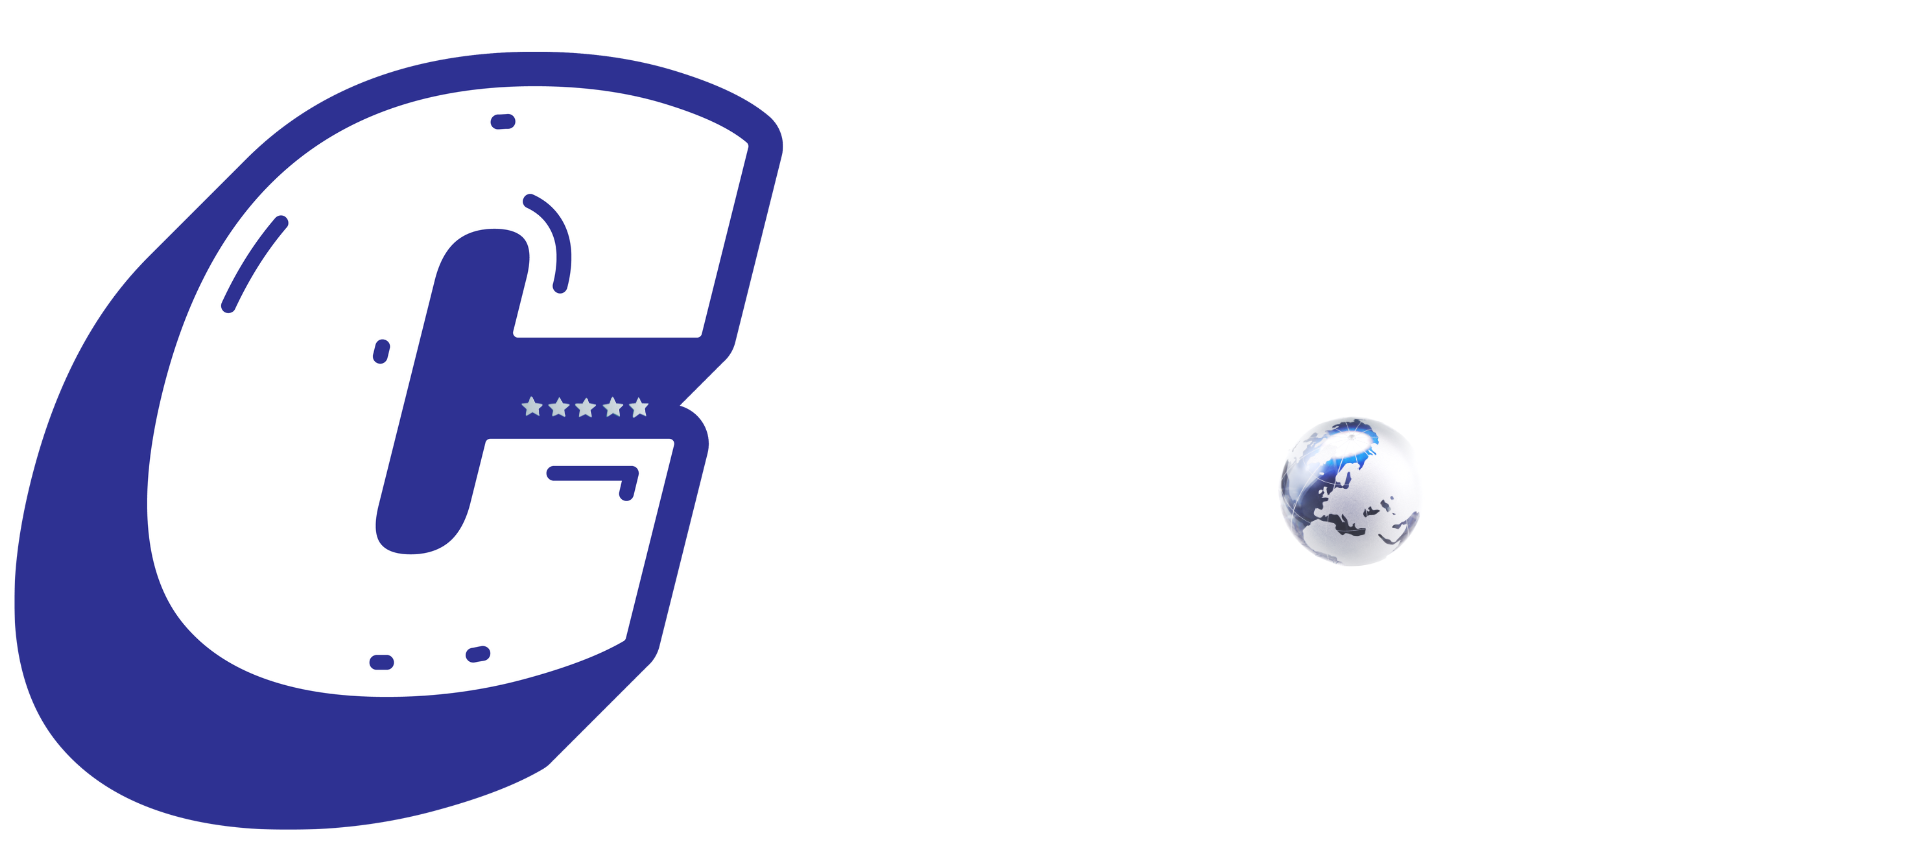 Cam'on Travel